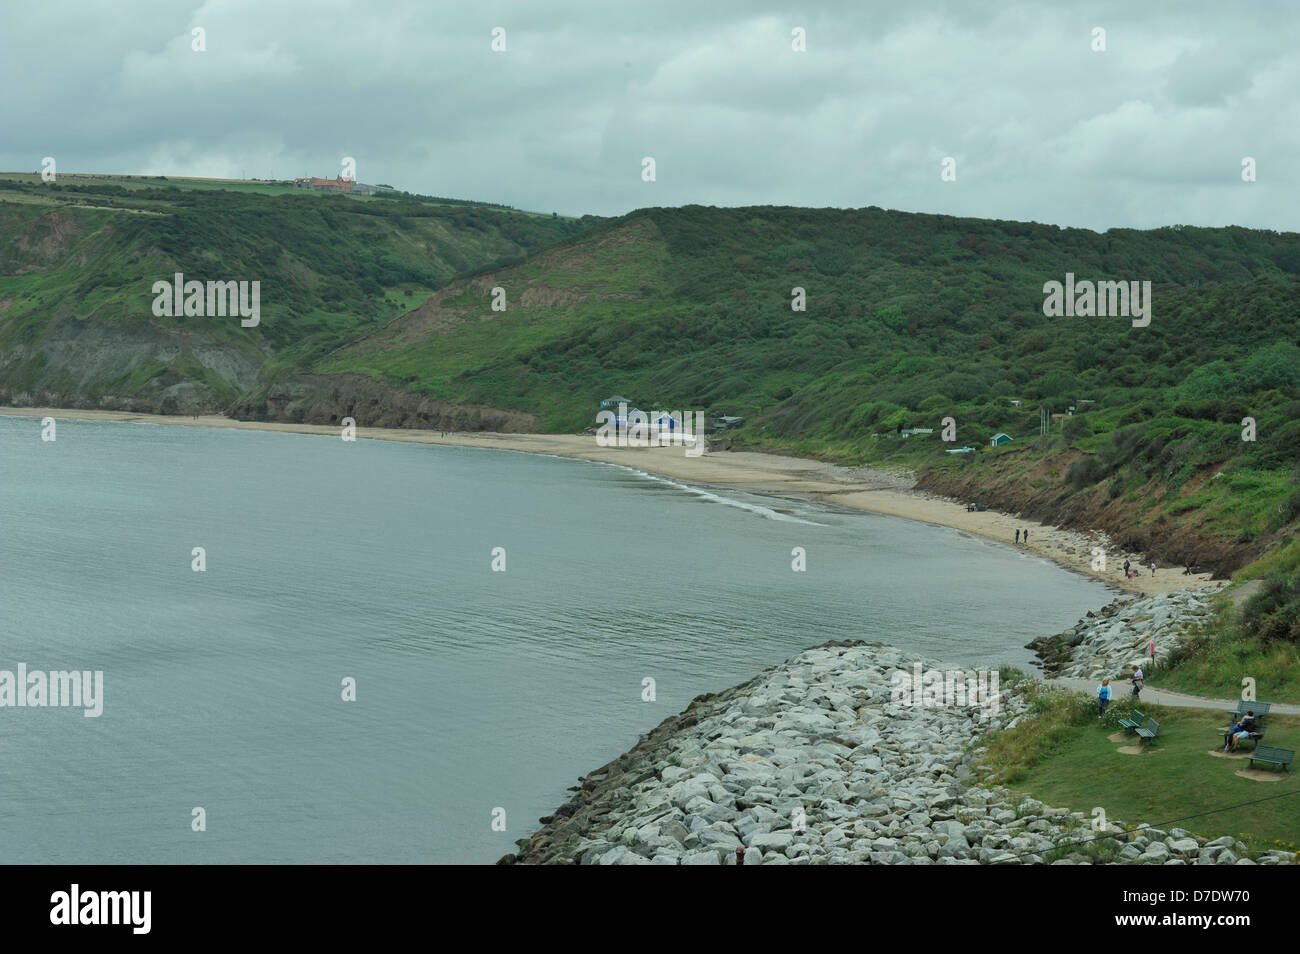 Dorf Runwick Bucht am Meer, Nordsee, Küste, Berge, Landschaft, Menschen, Sand, Stockfoto